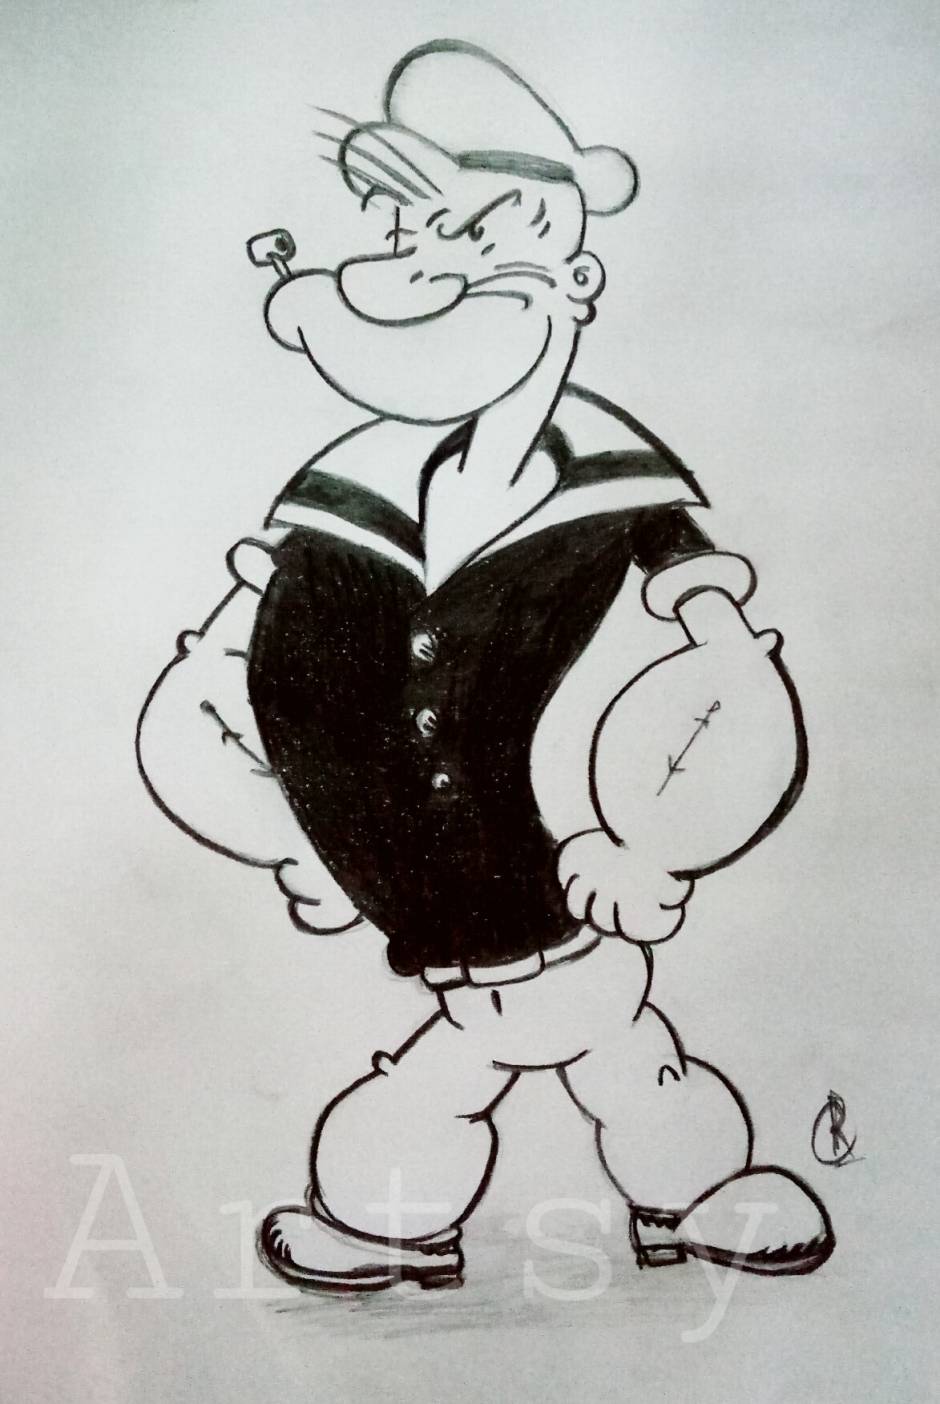 Popeye the sailor man Pencil sketch | Instagram